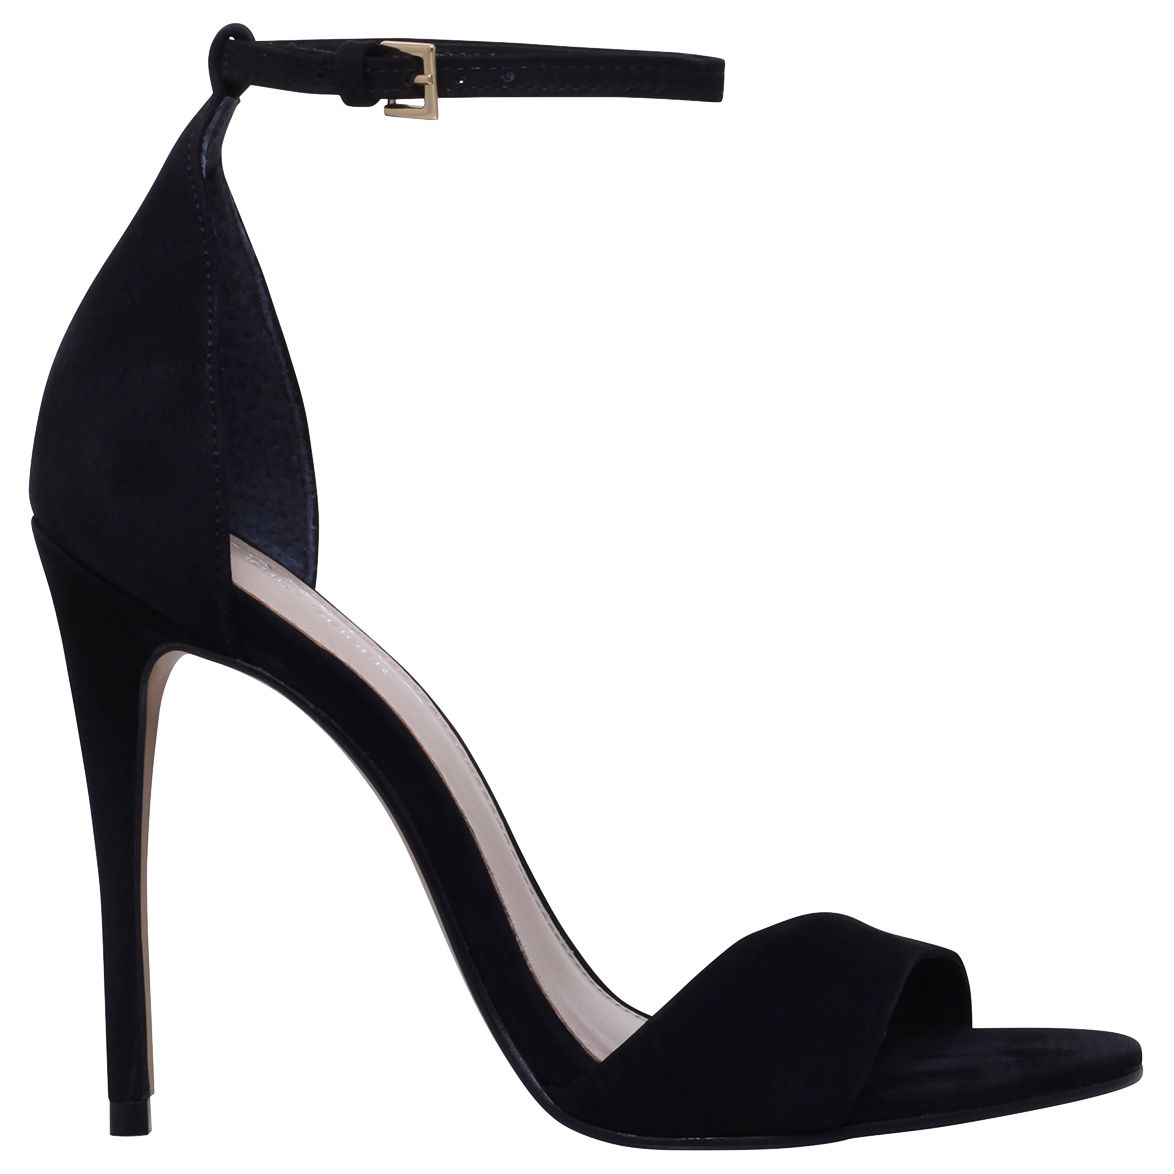 Carvela Glimmer High Heel Sandals, Black Nubuck, 5